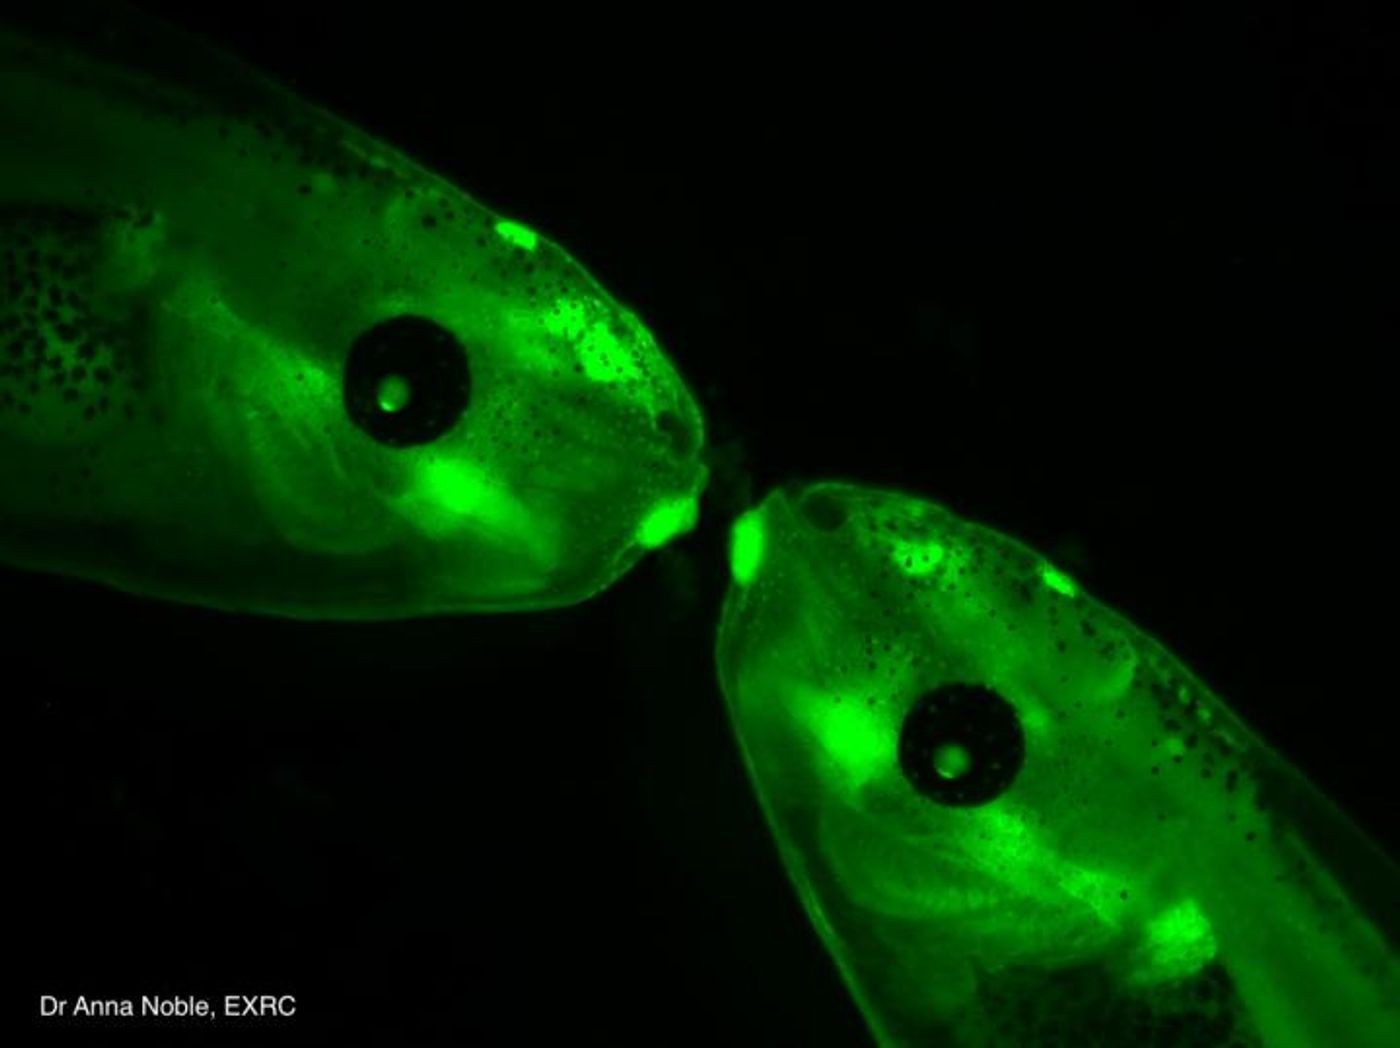 Transgenic Xenopus tadpoles. / Credit: Dr. Anna Noble, EXRC